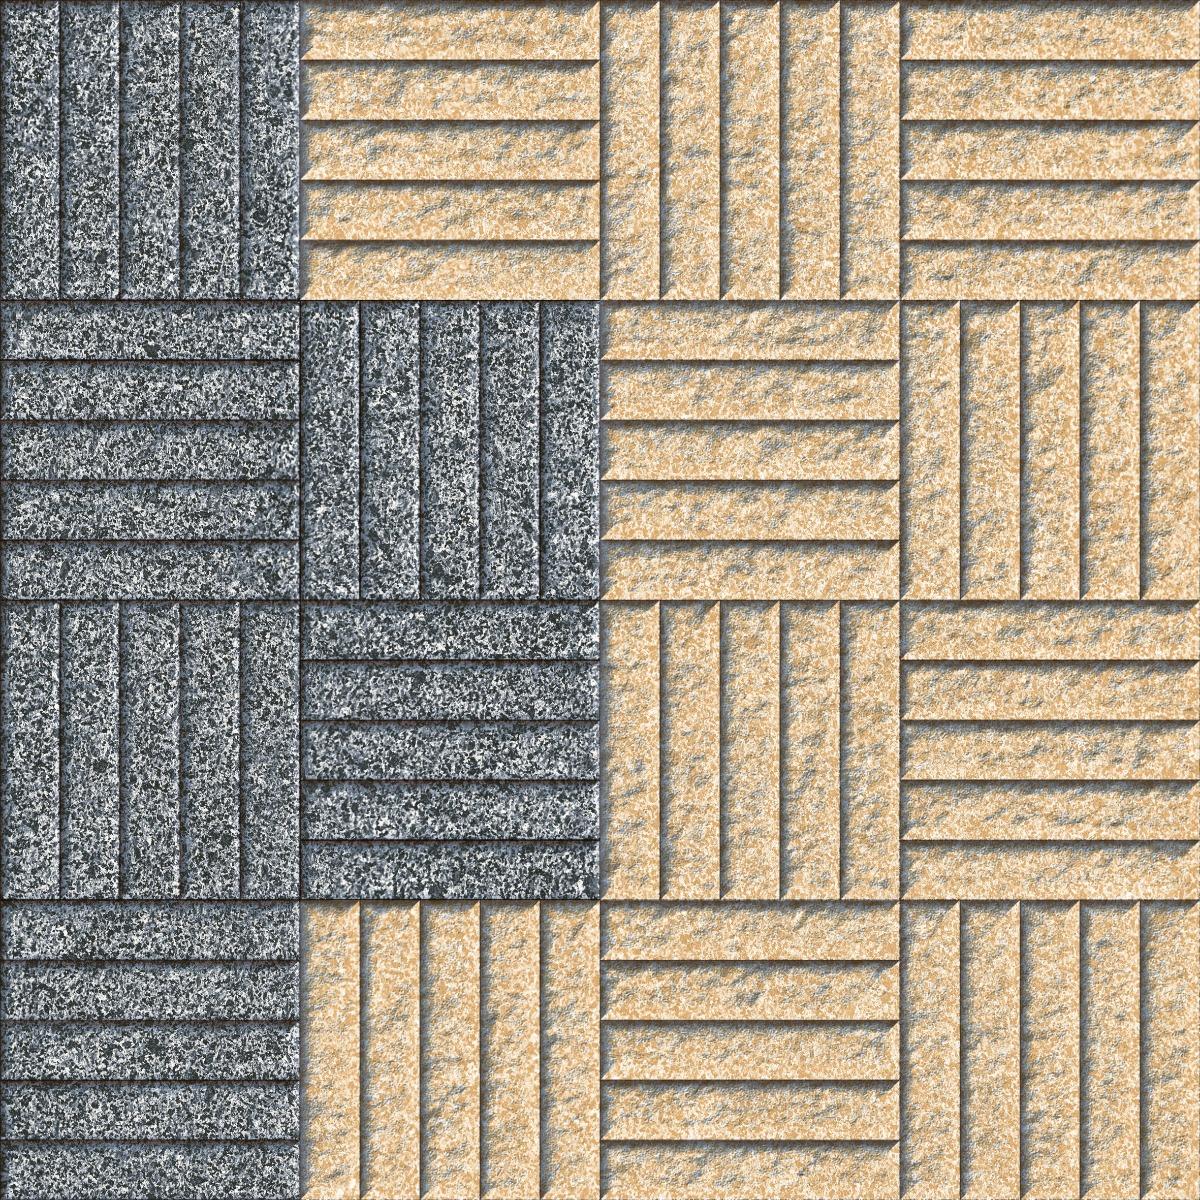 Commercial Tiles for Commercial Tiles, Parking Tiles, Office Tiles, Pathway Tiles, Hospital Tiles, High Traffic Tiles, Bar/Restaurant, Outdoor Area, Porch/Parking